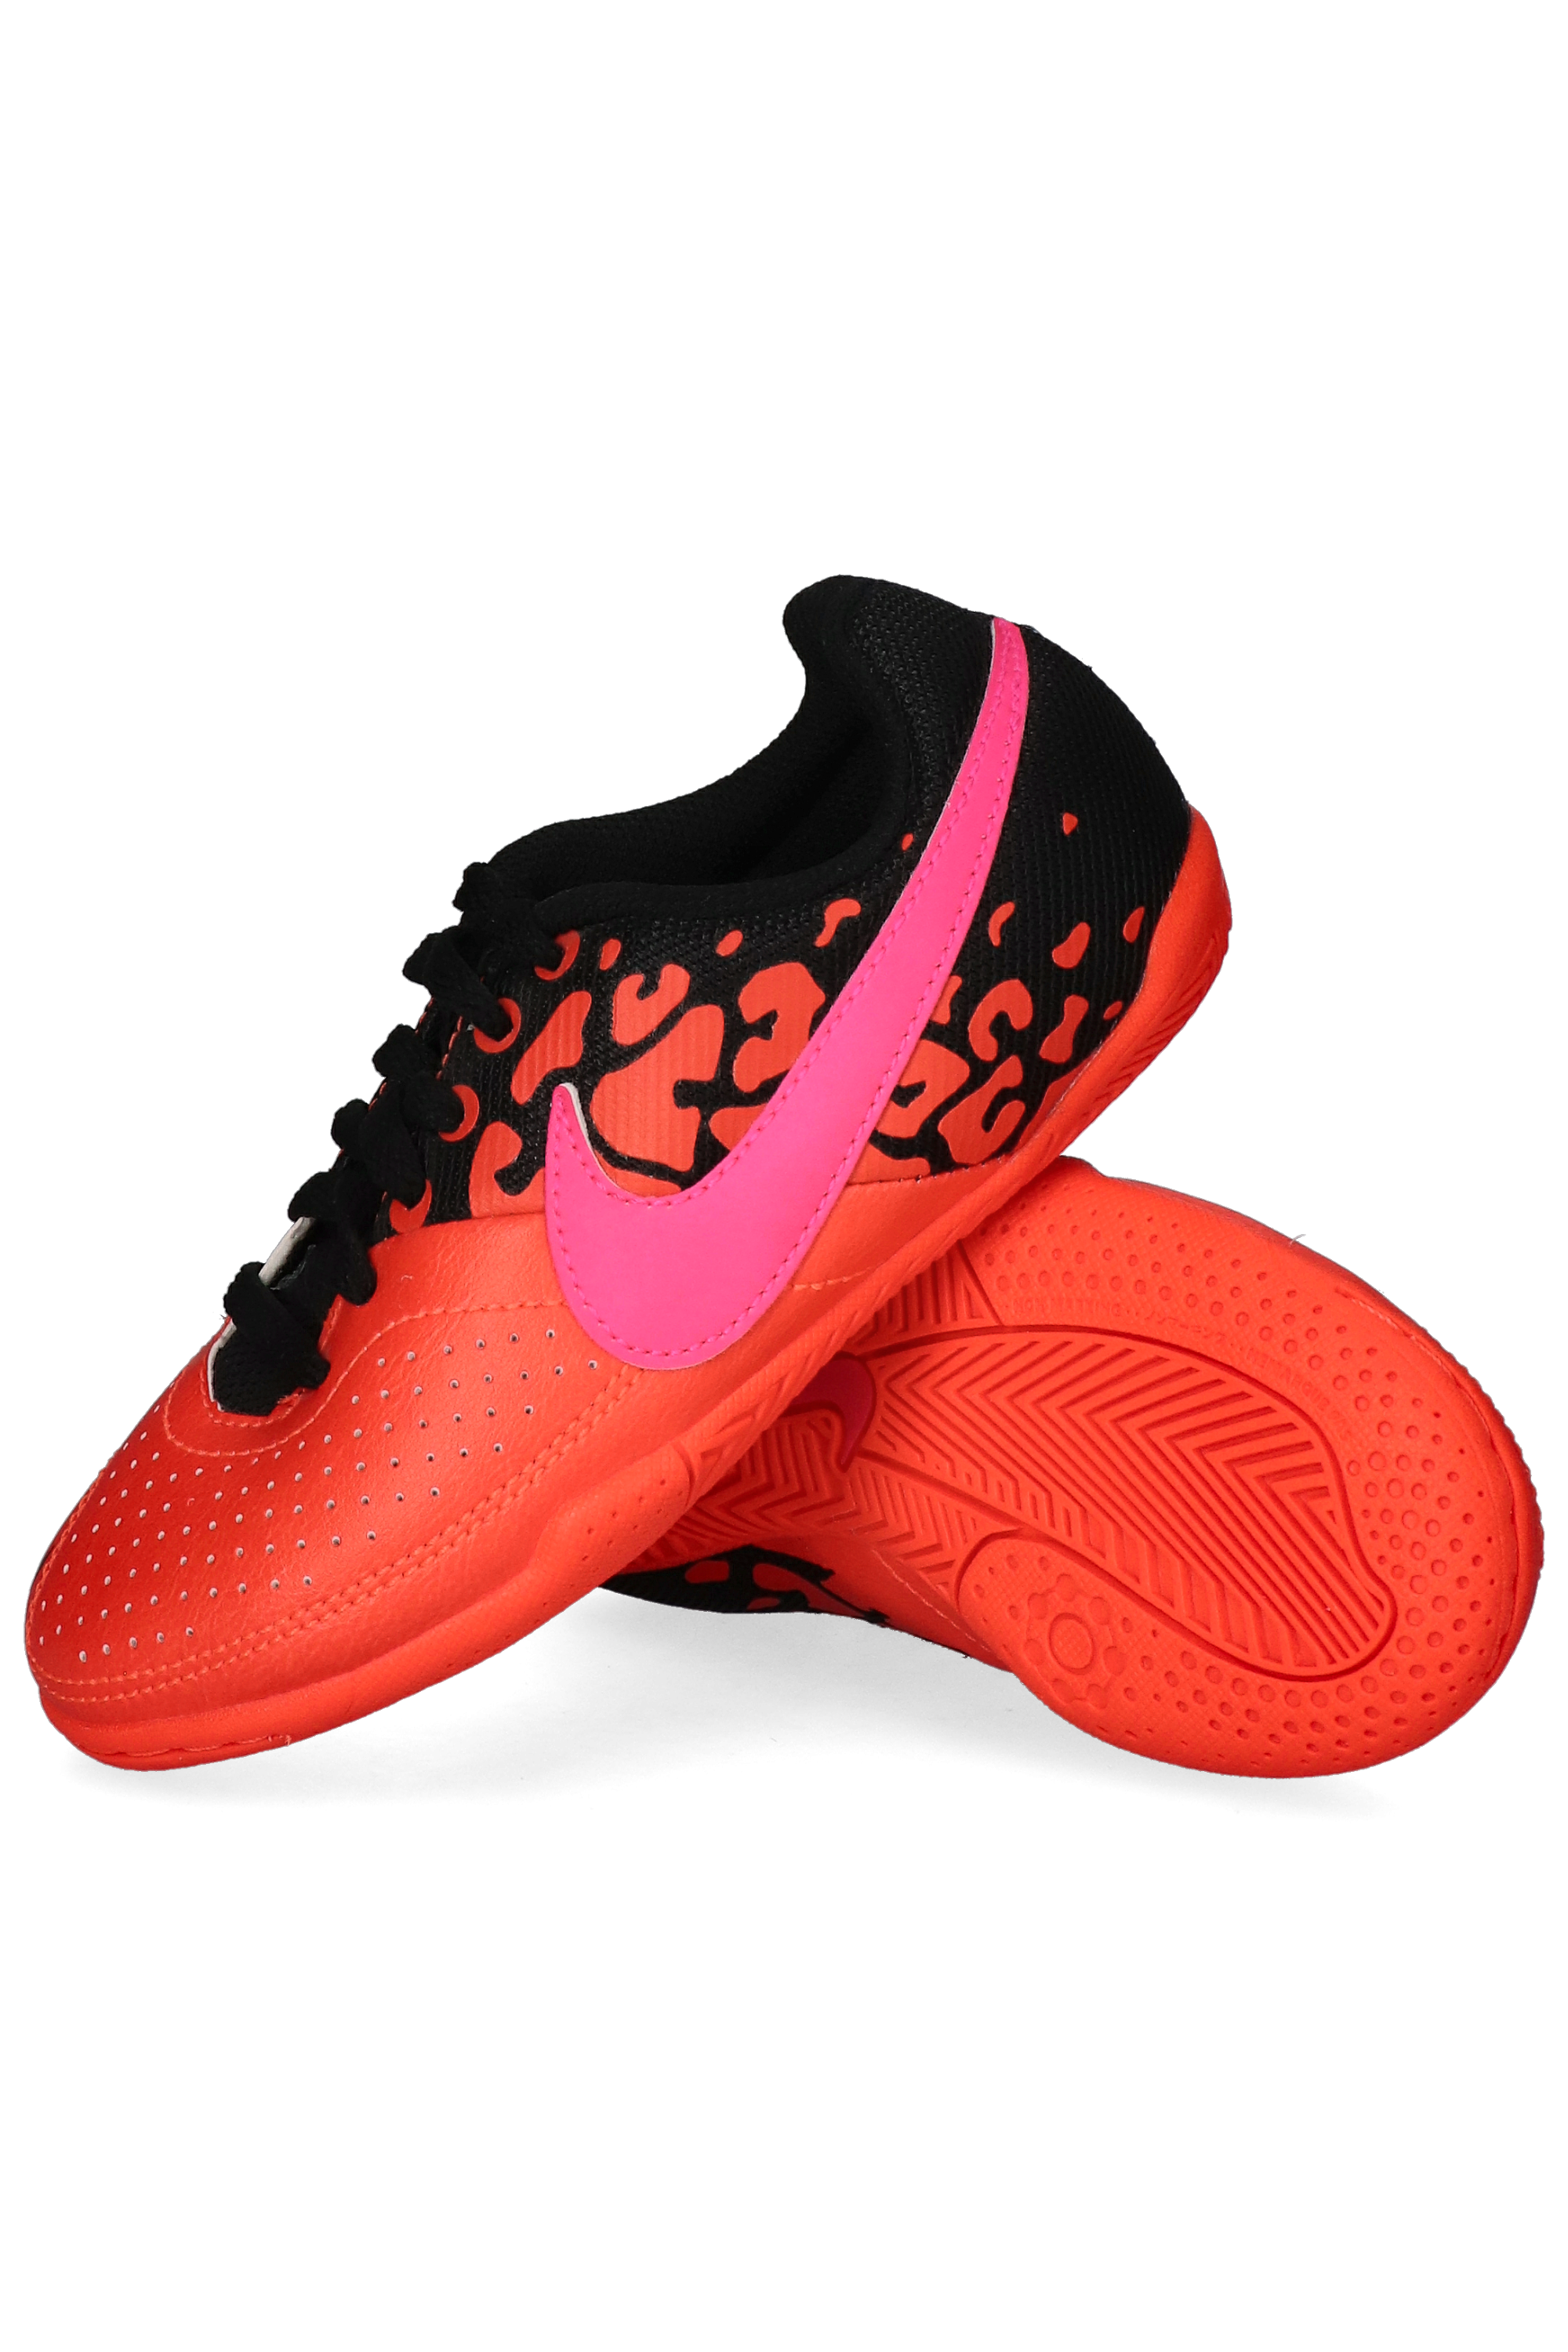 Nike Elastico II Junior | R-GOL.com - Football boots \u0026 equipment